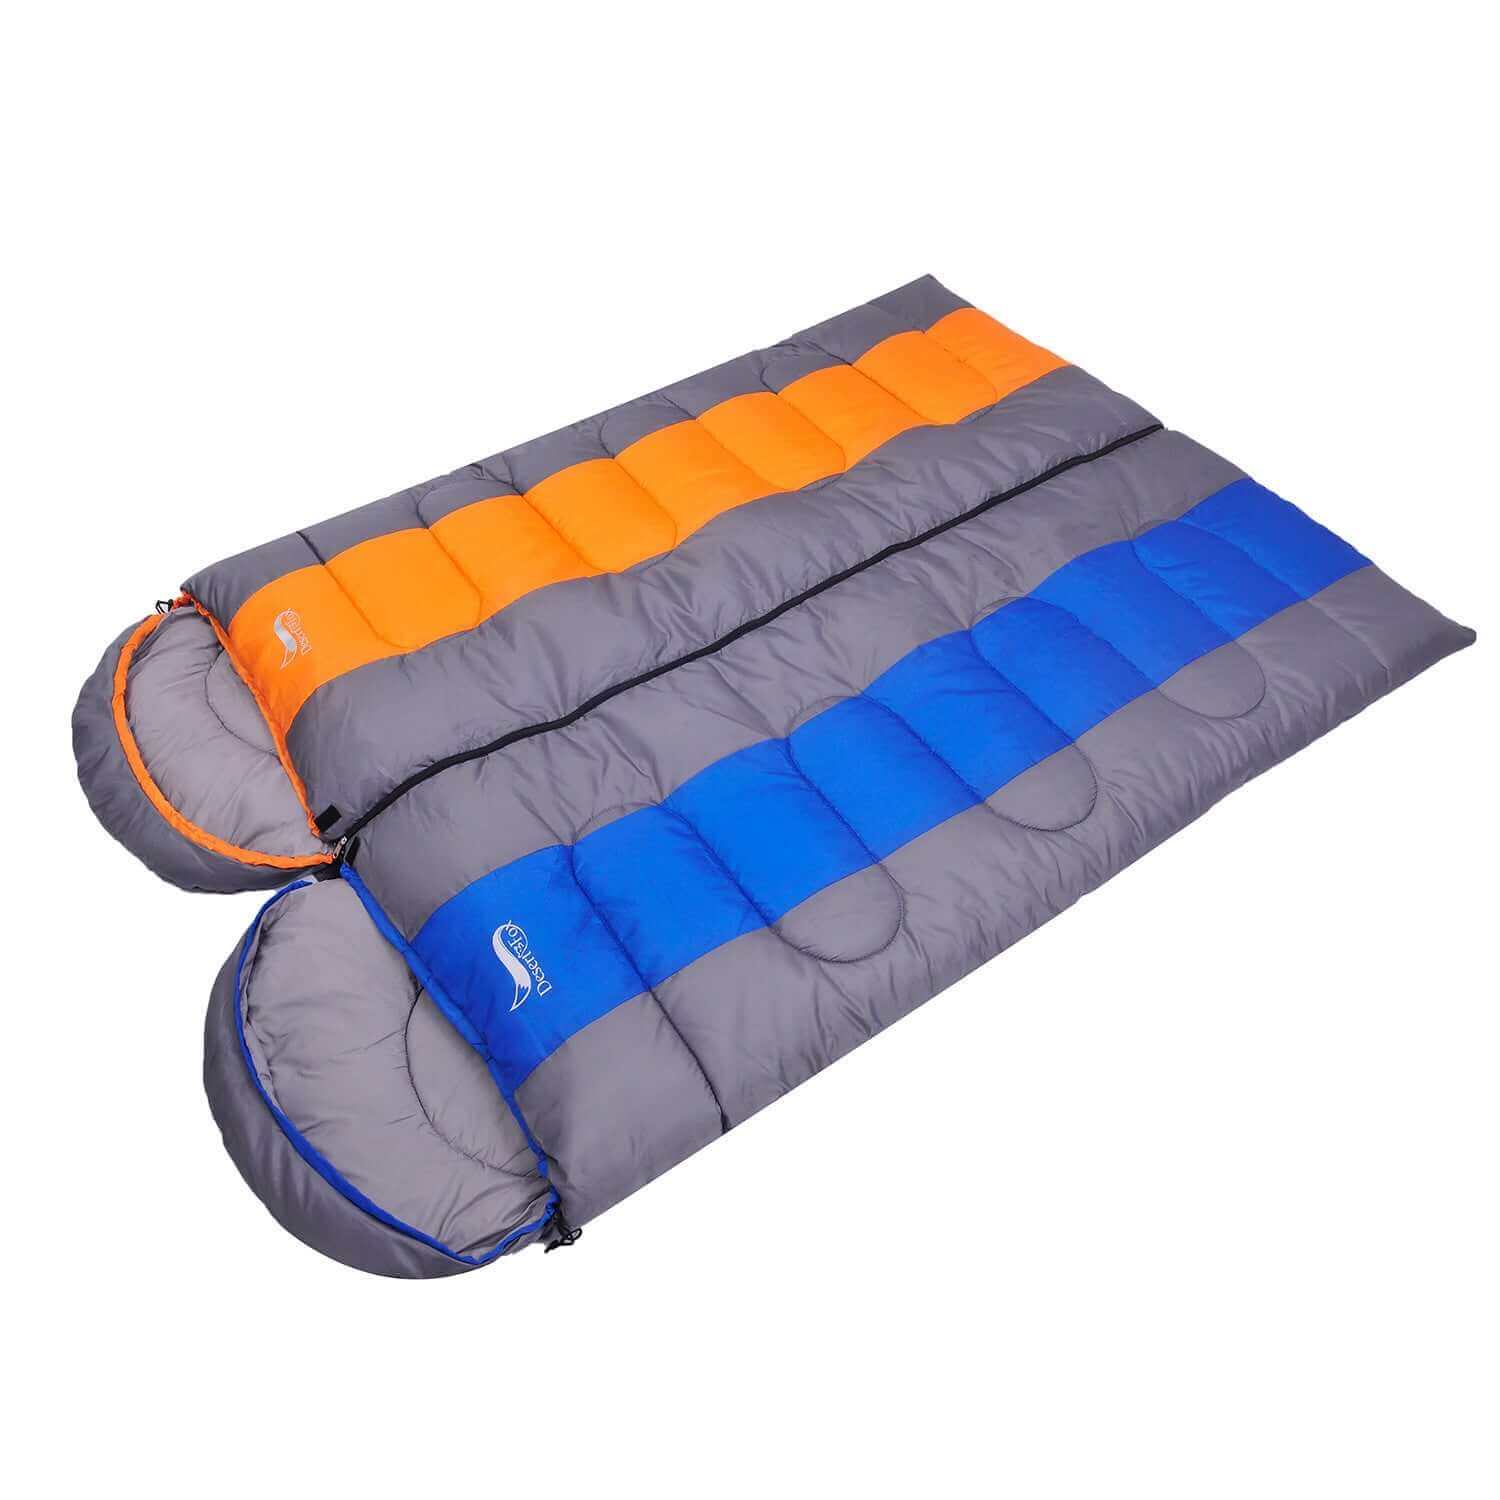 Lightweight Warm and Cold Sleeping Bag